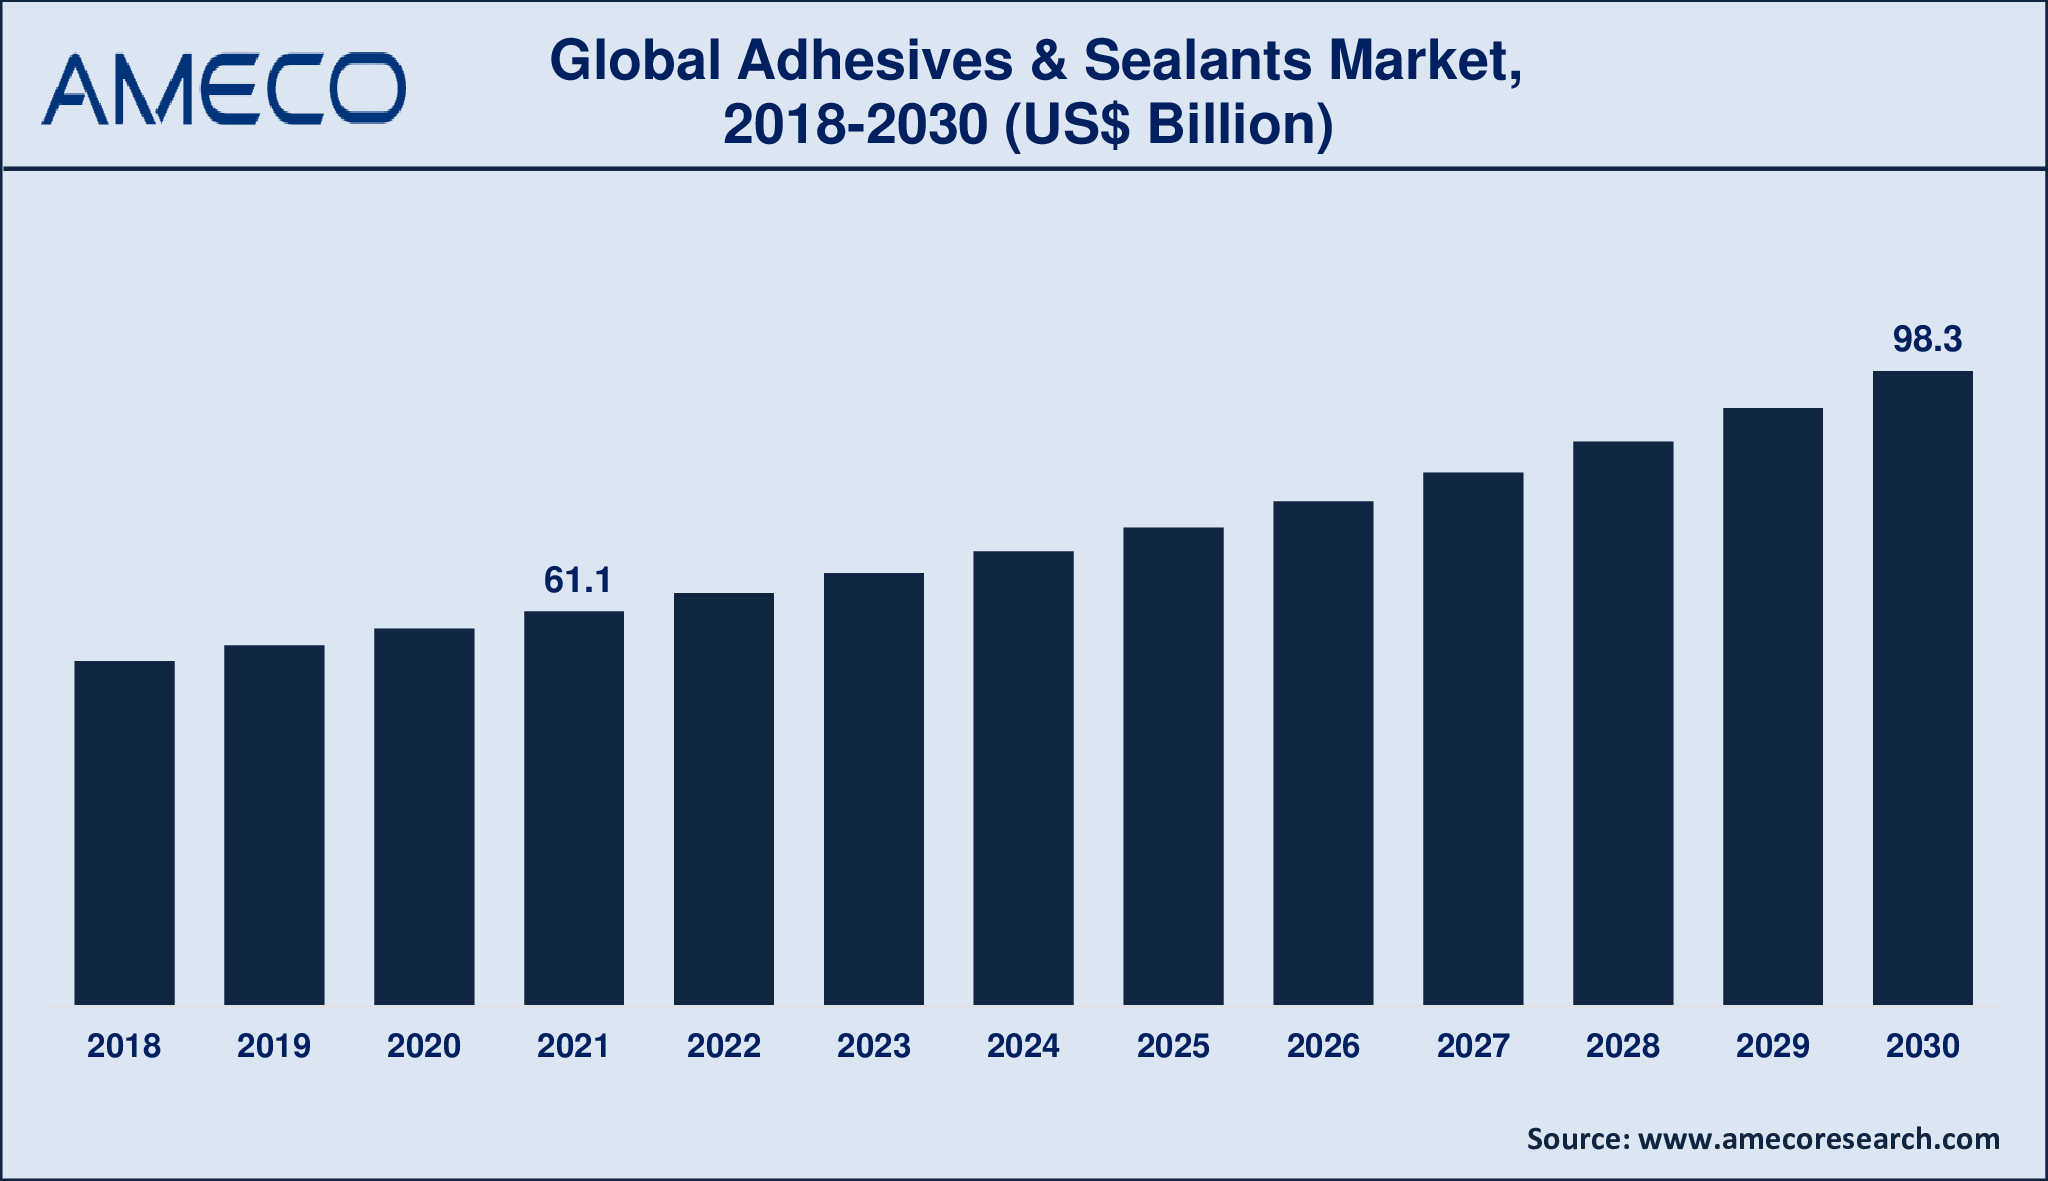 Adhesives & Sealants Market Dynamics